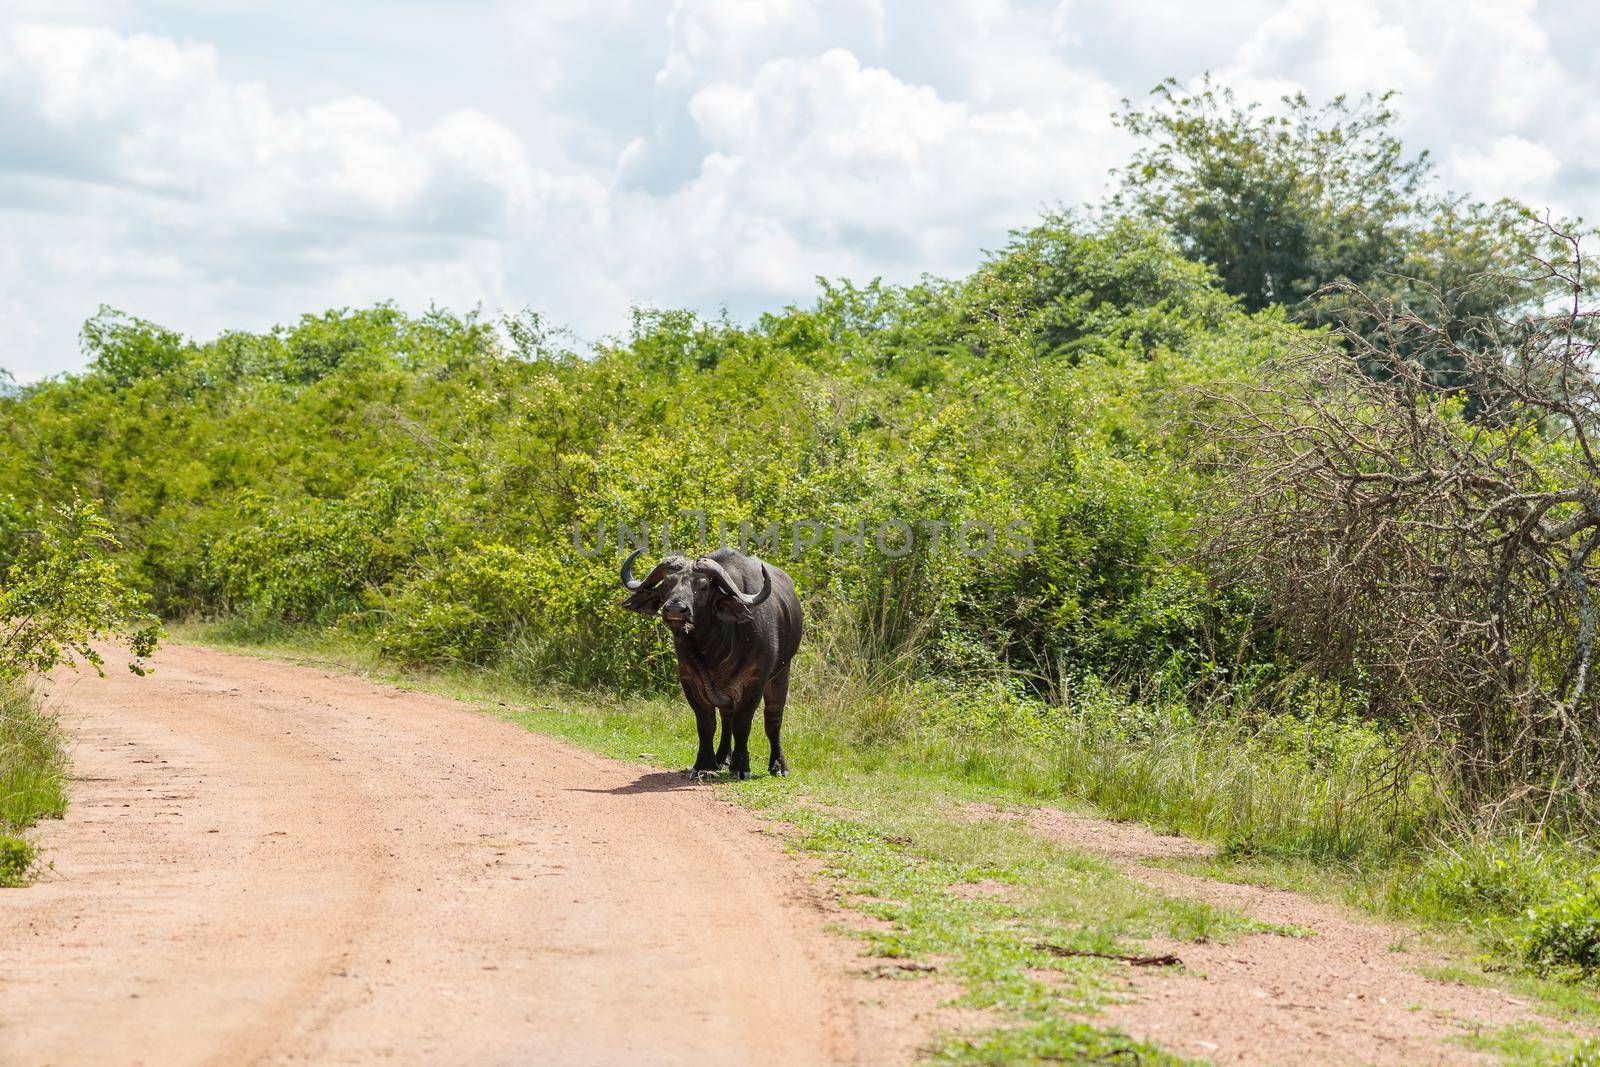 Wild African buffalo walking along the road in Africa by Yaroslav_astakhov